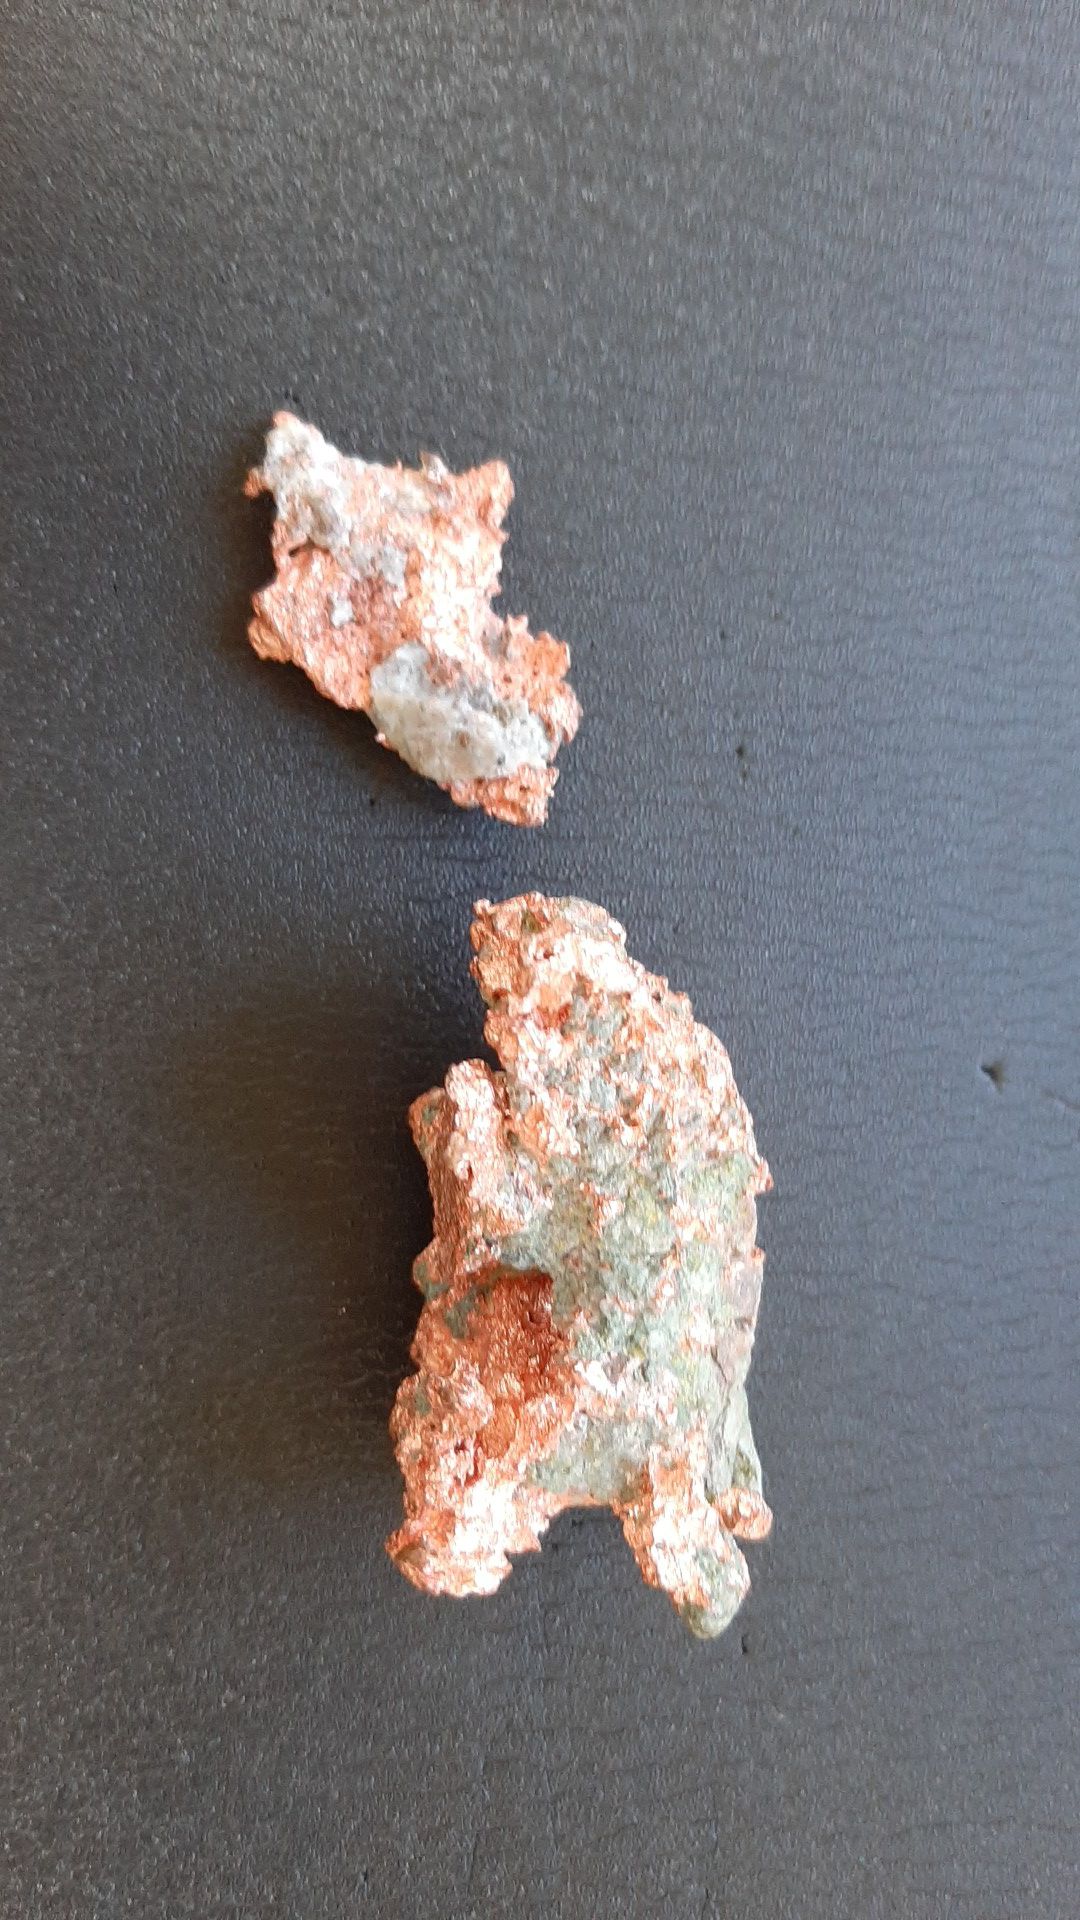 8oz of Michigan Native Copper